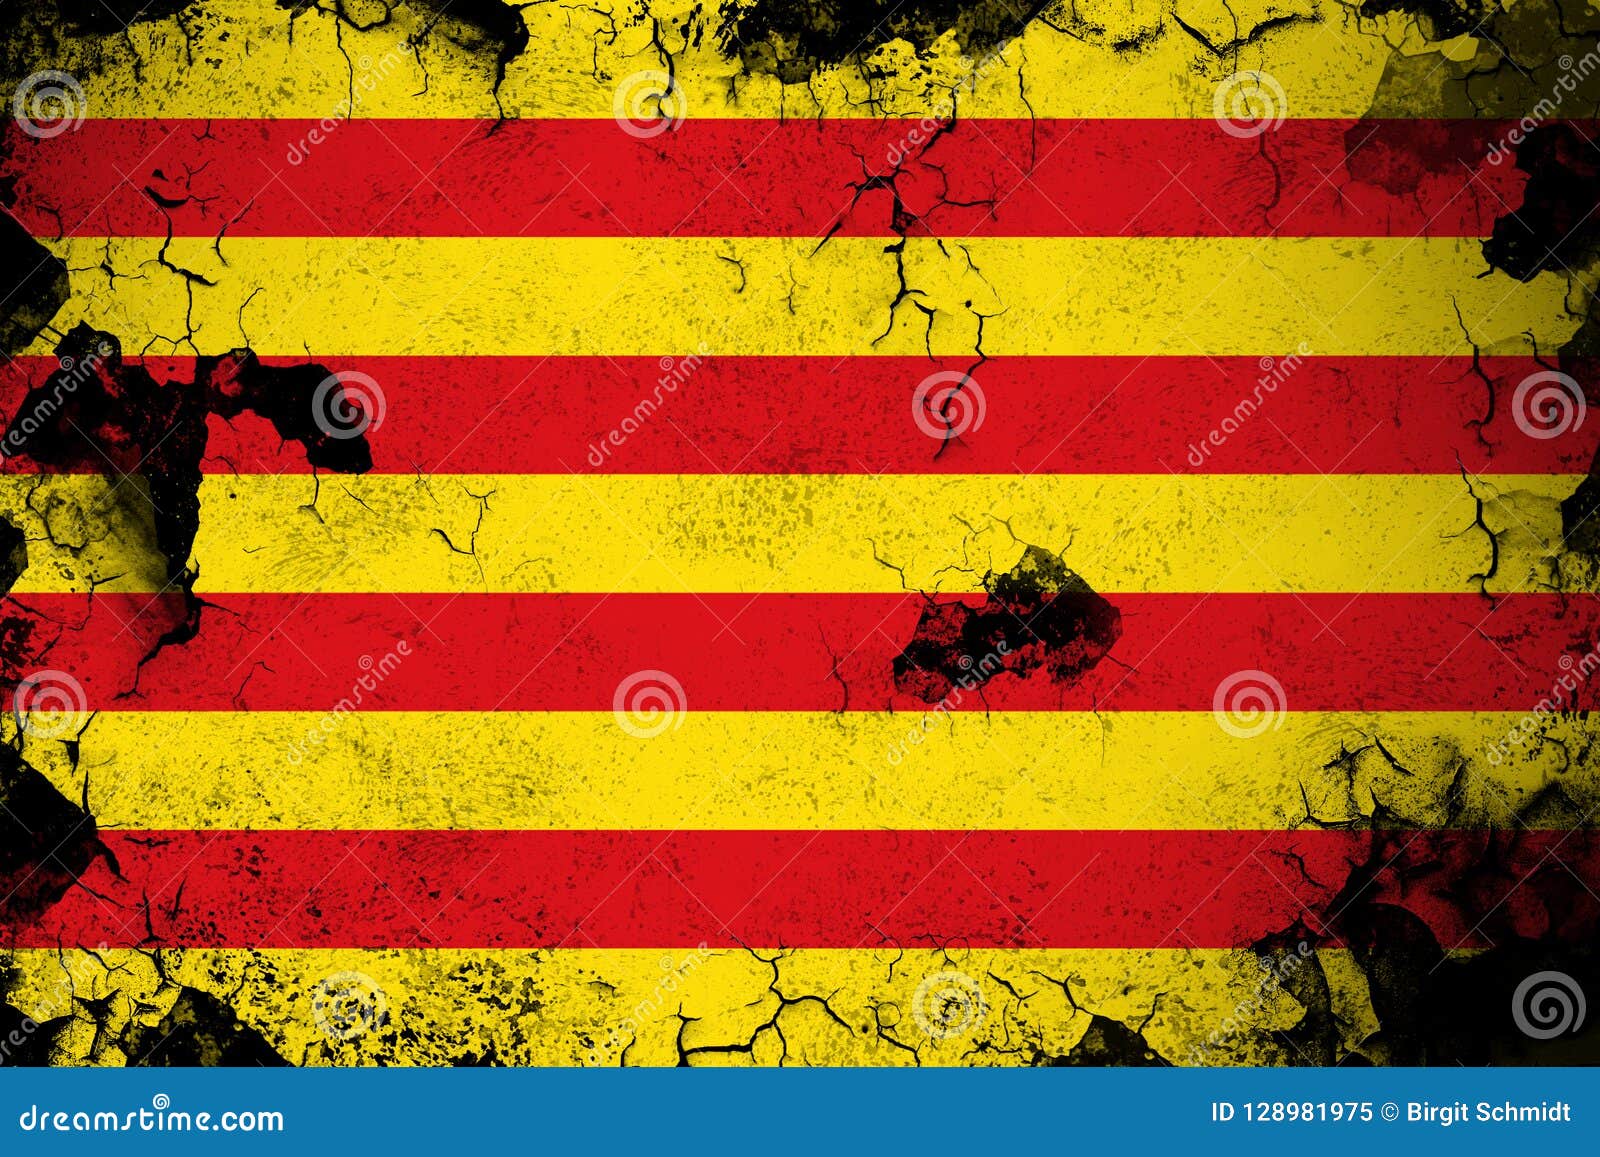 Catalonia Rusty And Grunge Flag Illustration Stock Illustration ...